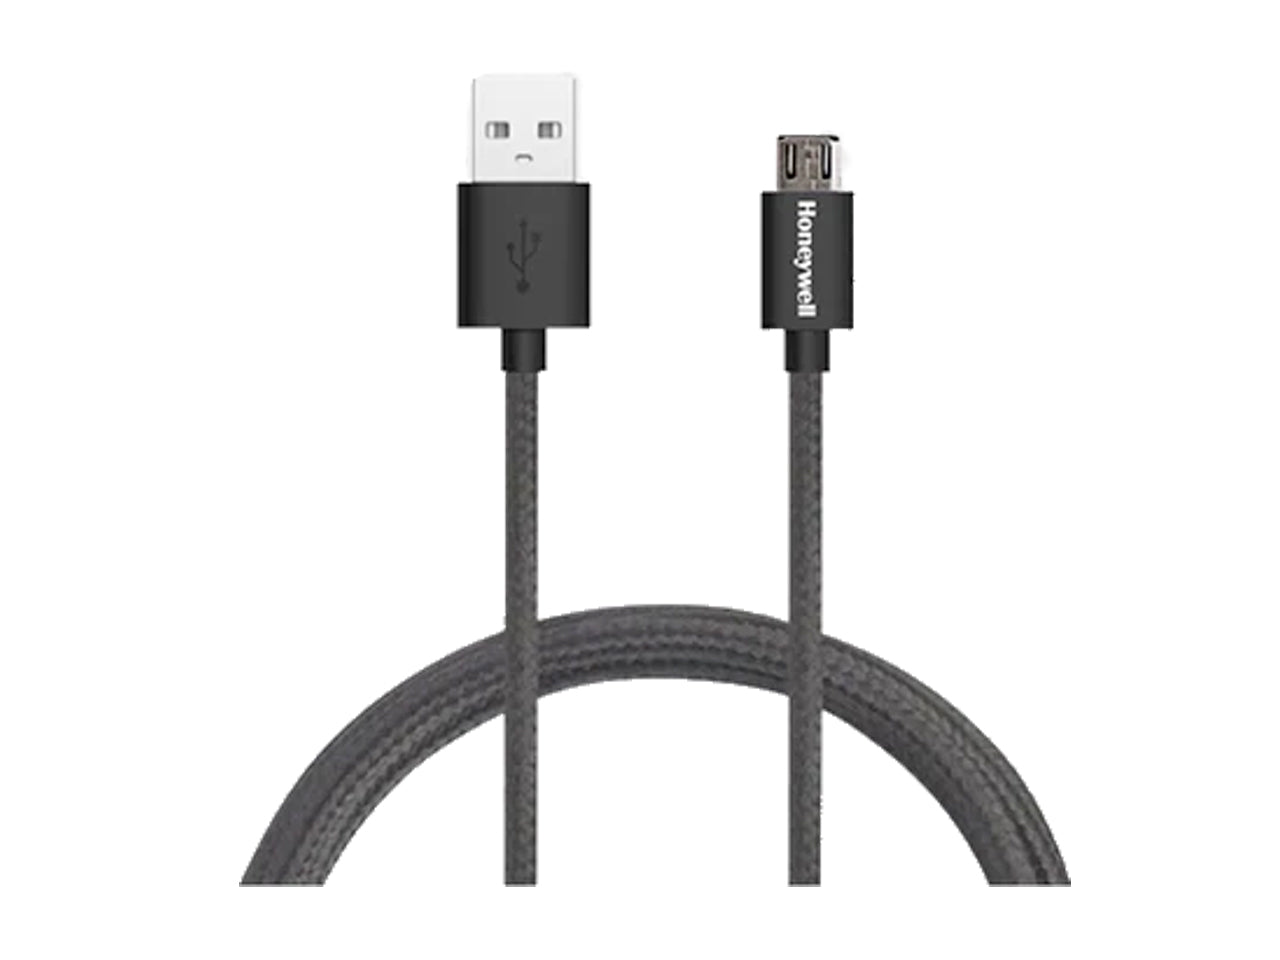 Honeywell USB to Micro USB Cable 1.2 Mtr (Braided) Black